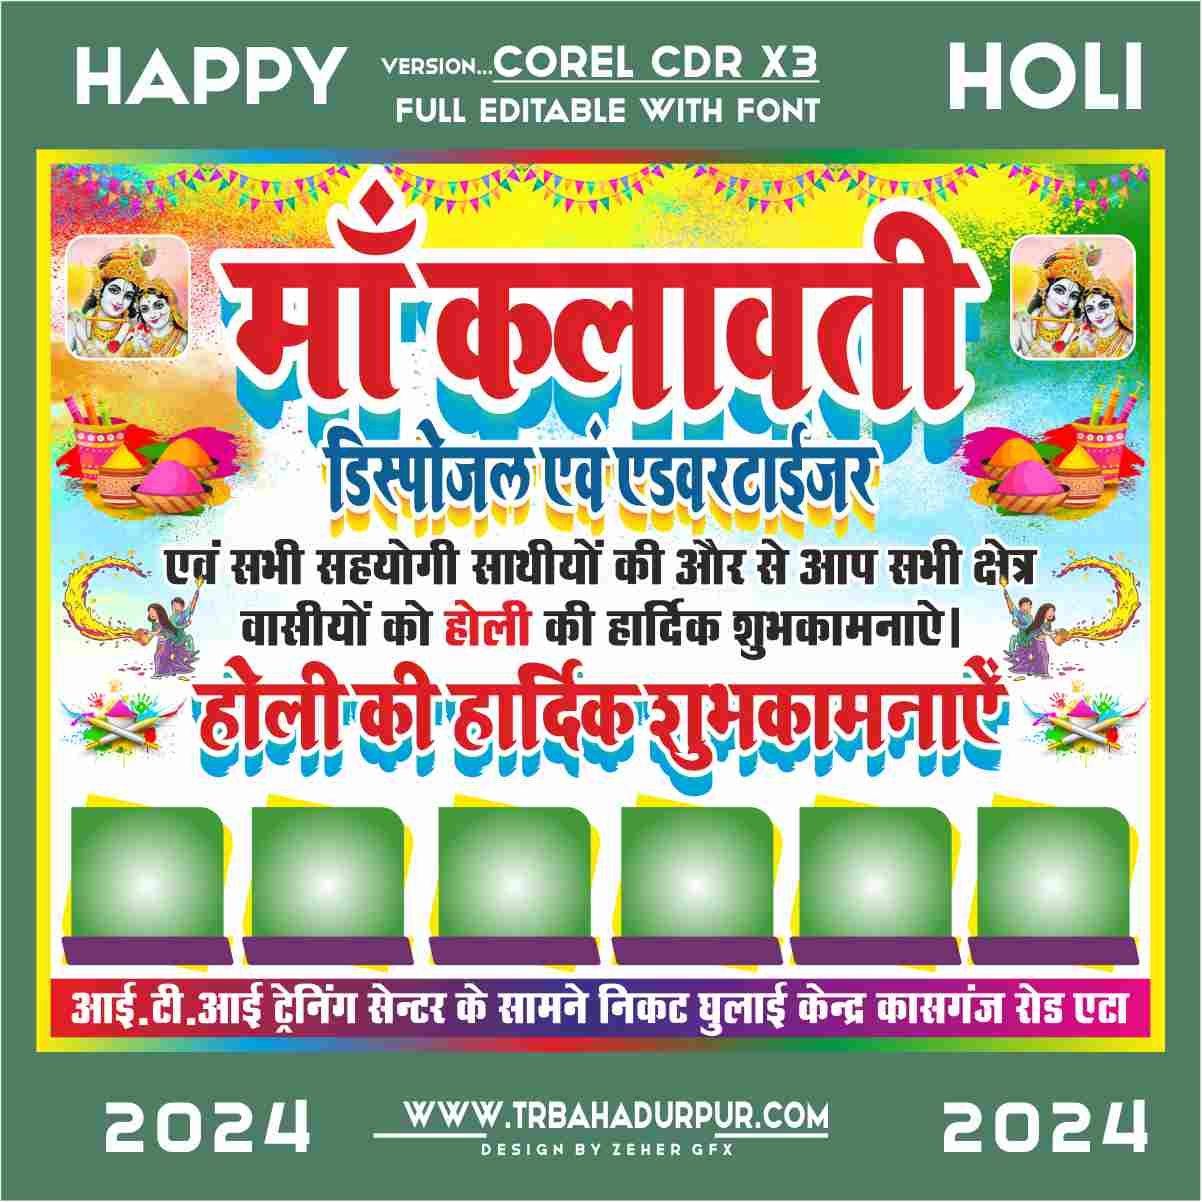 Holi Ki Hardik Shubhkamnaye (Happy Holi) Banner